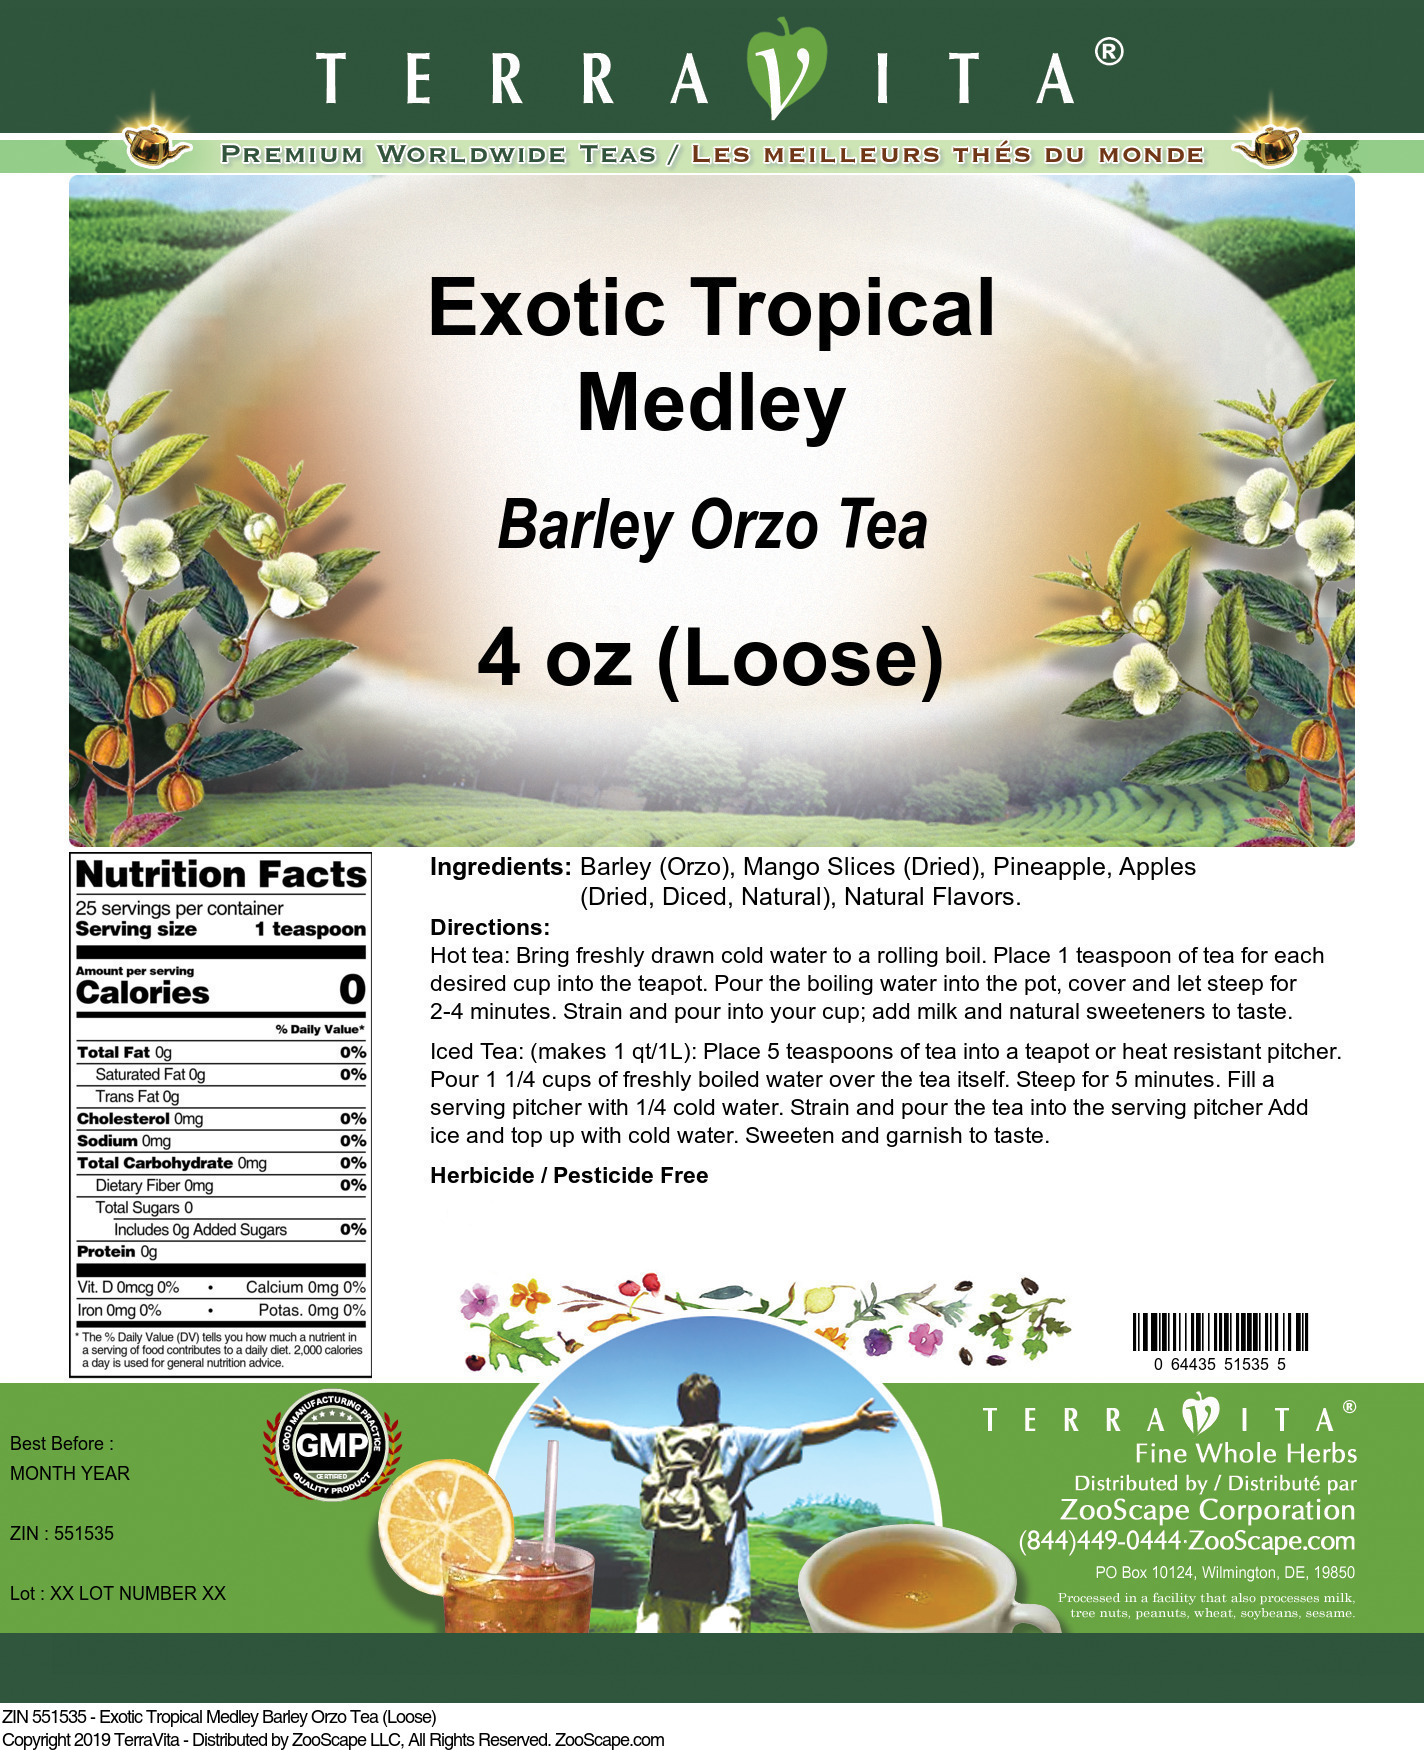 Exotic Tropical Medley Barley Orzo Tea (Loose) - Label